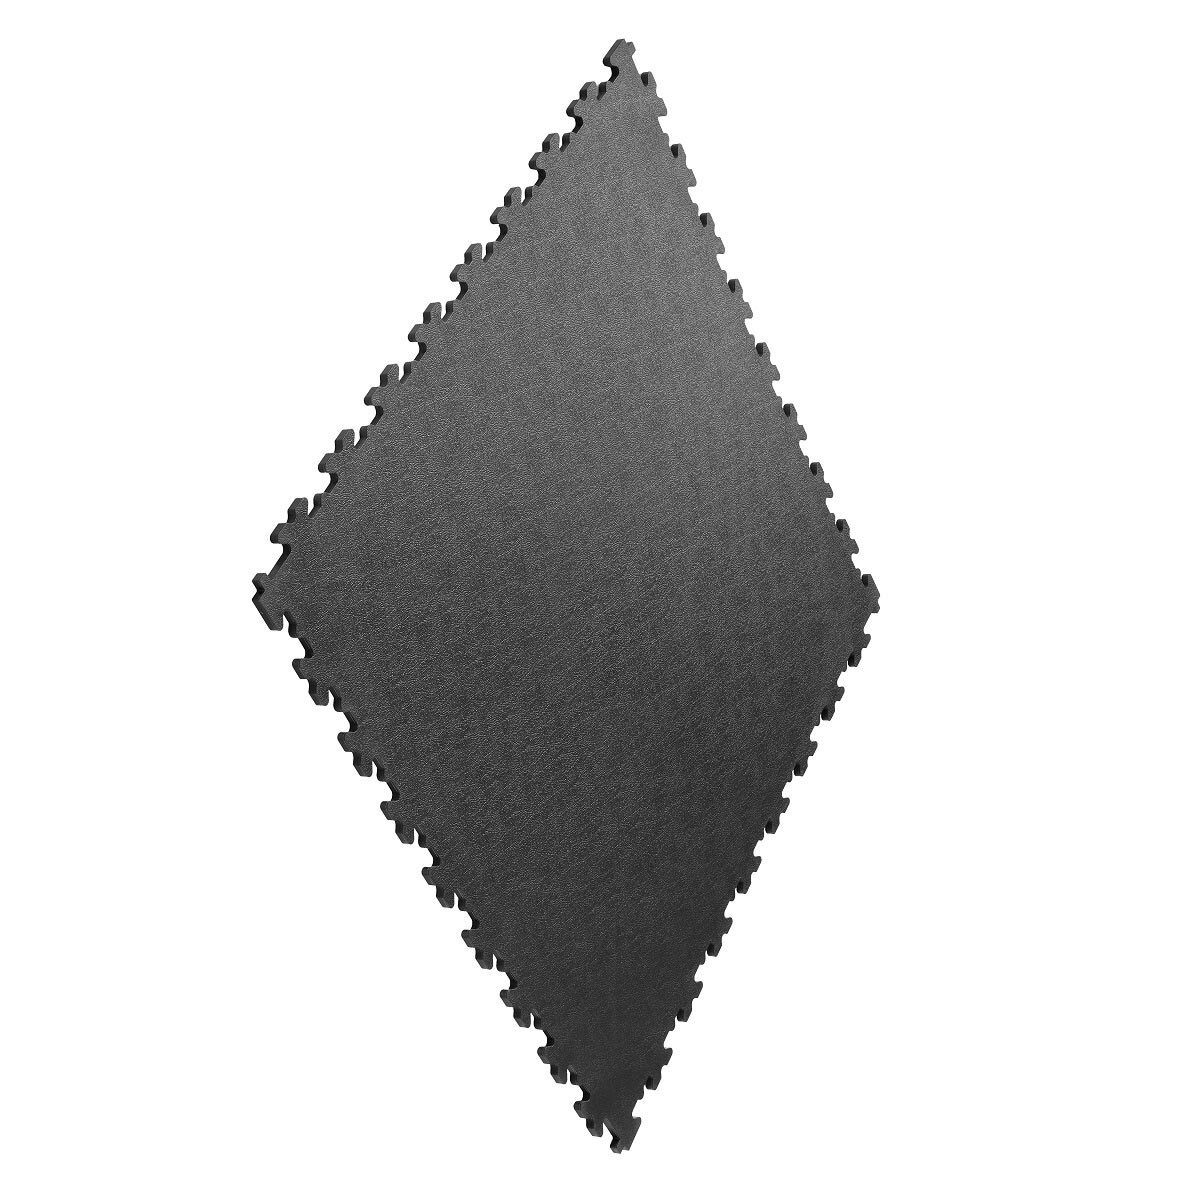 Klikflor X500 Garage Floor Tiles in Graphite (496 x 496 x 7mm) - 0.98m² per pack